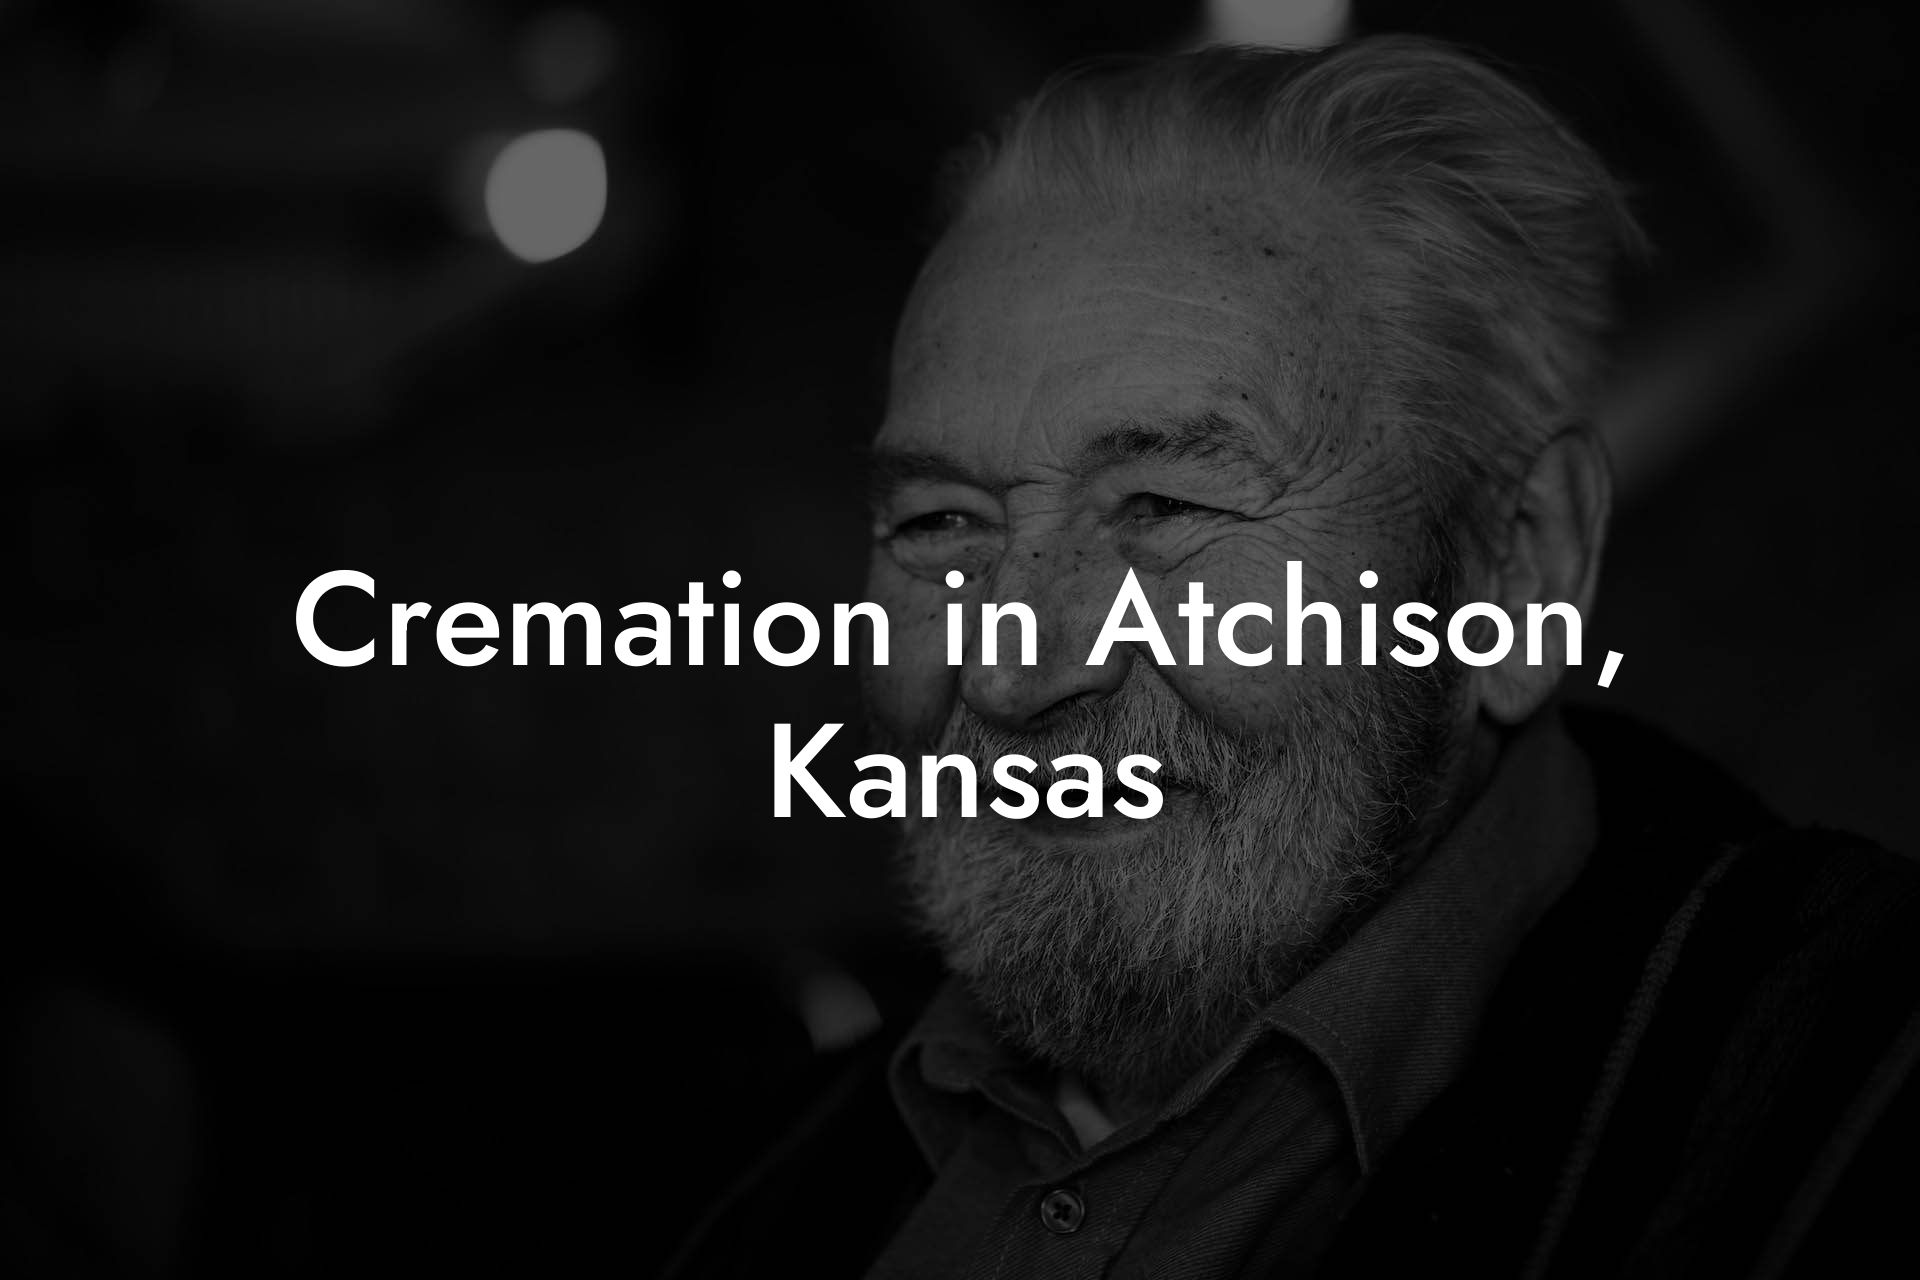 Cremation in Atchison, Kansas